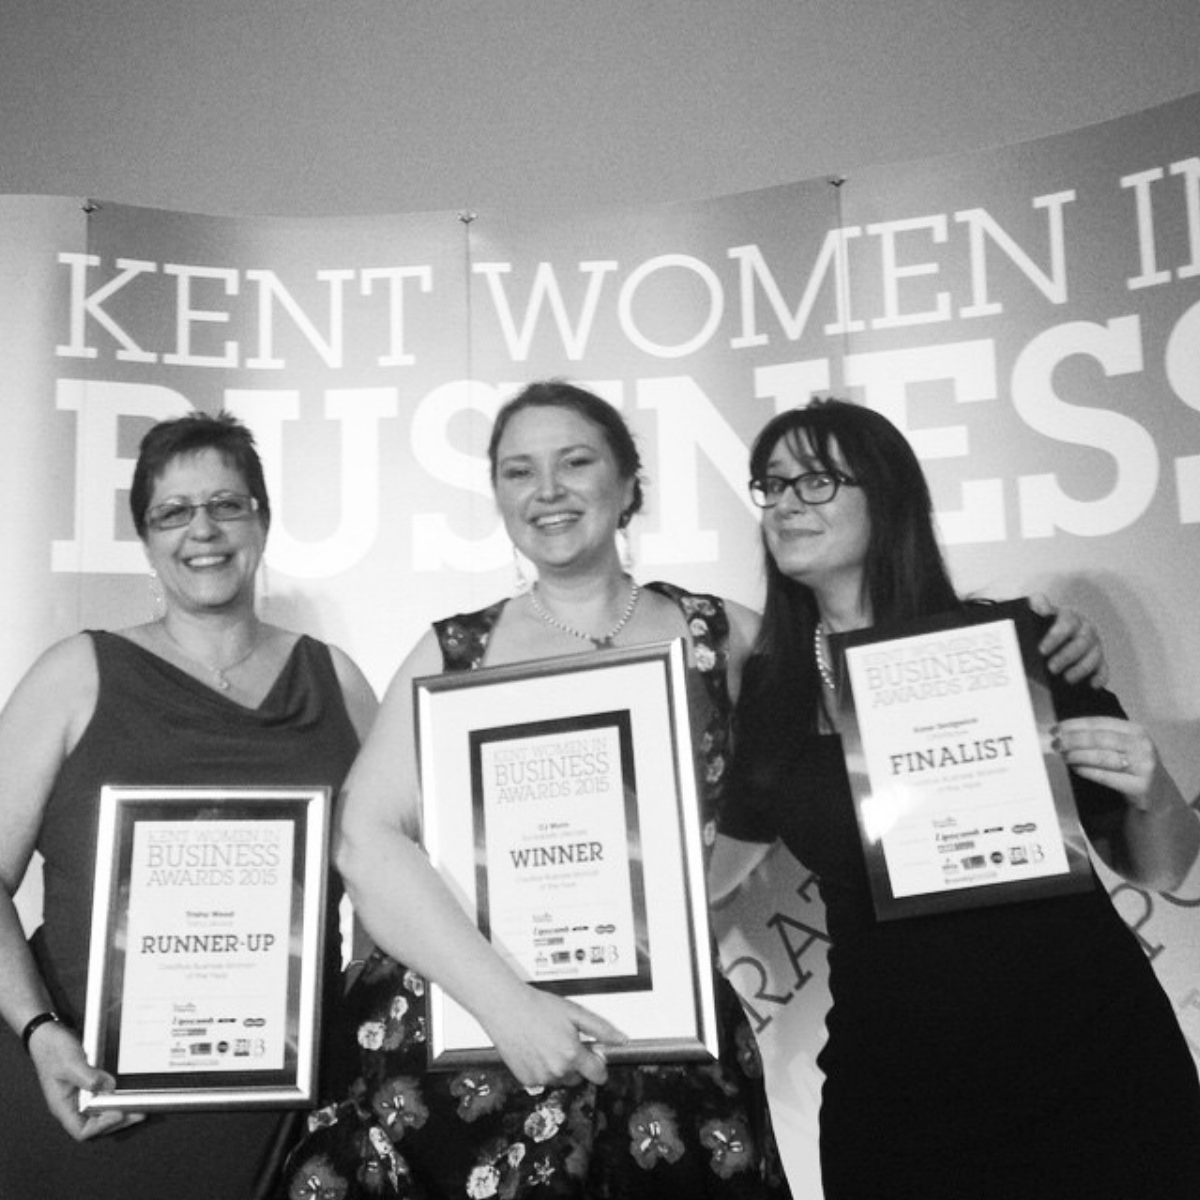 CJ Munn, Trisha Wood & Kaye Sedgwick-Jones receive awards